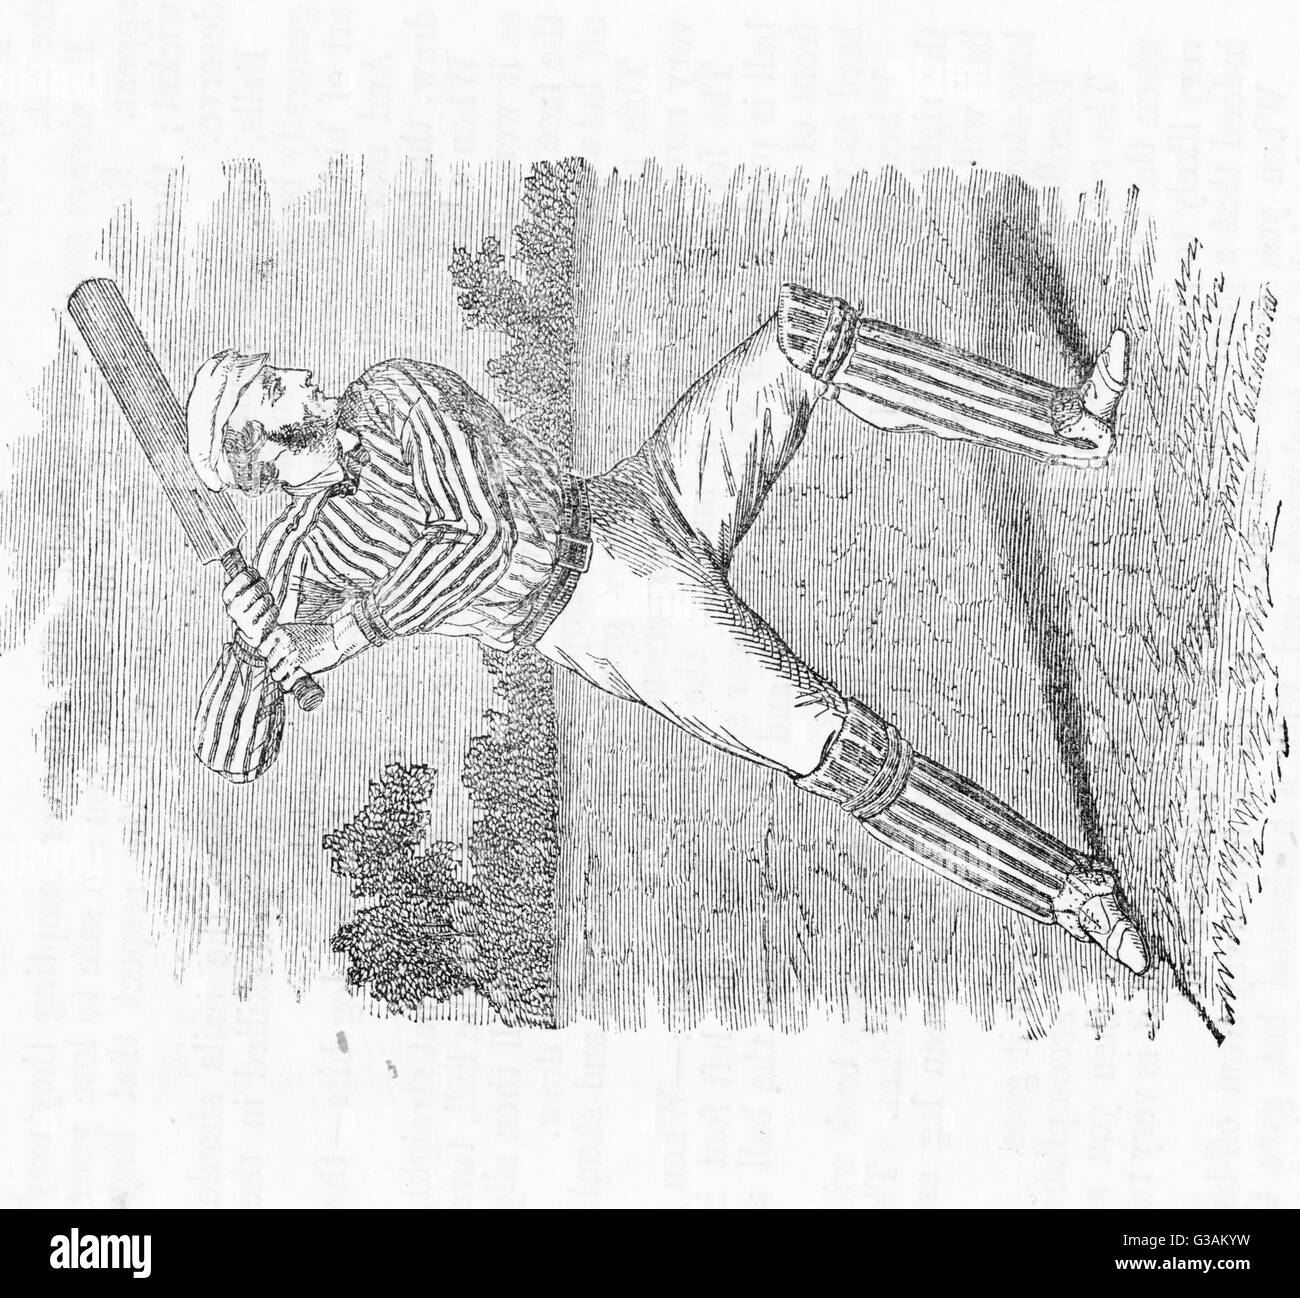 A batsman in the 19th century Stock Photo